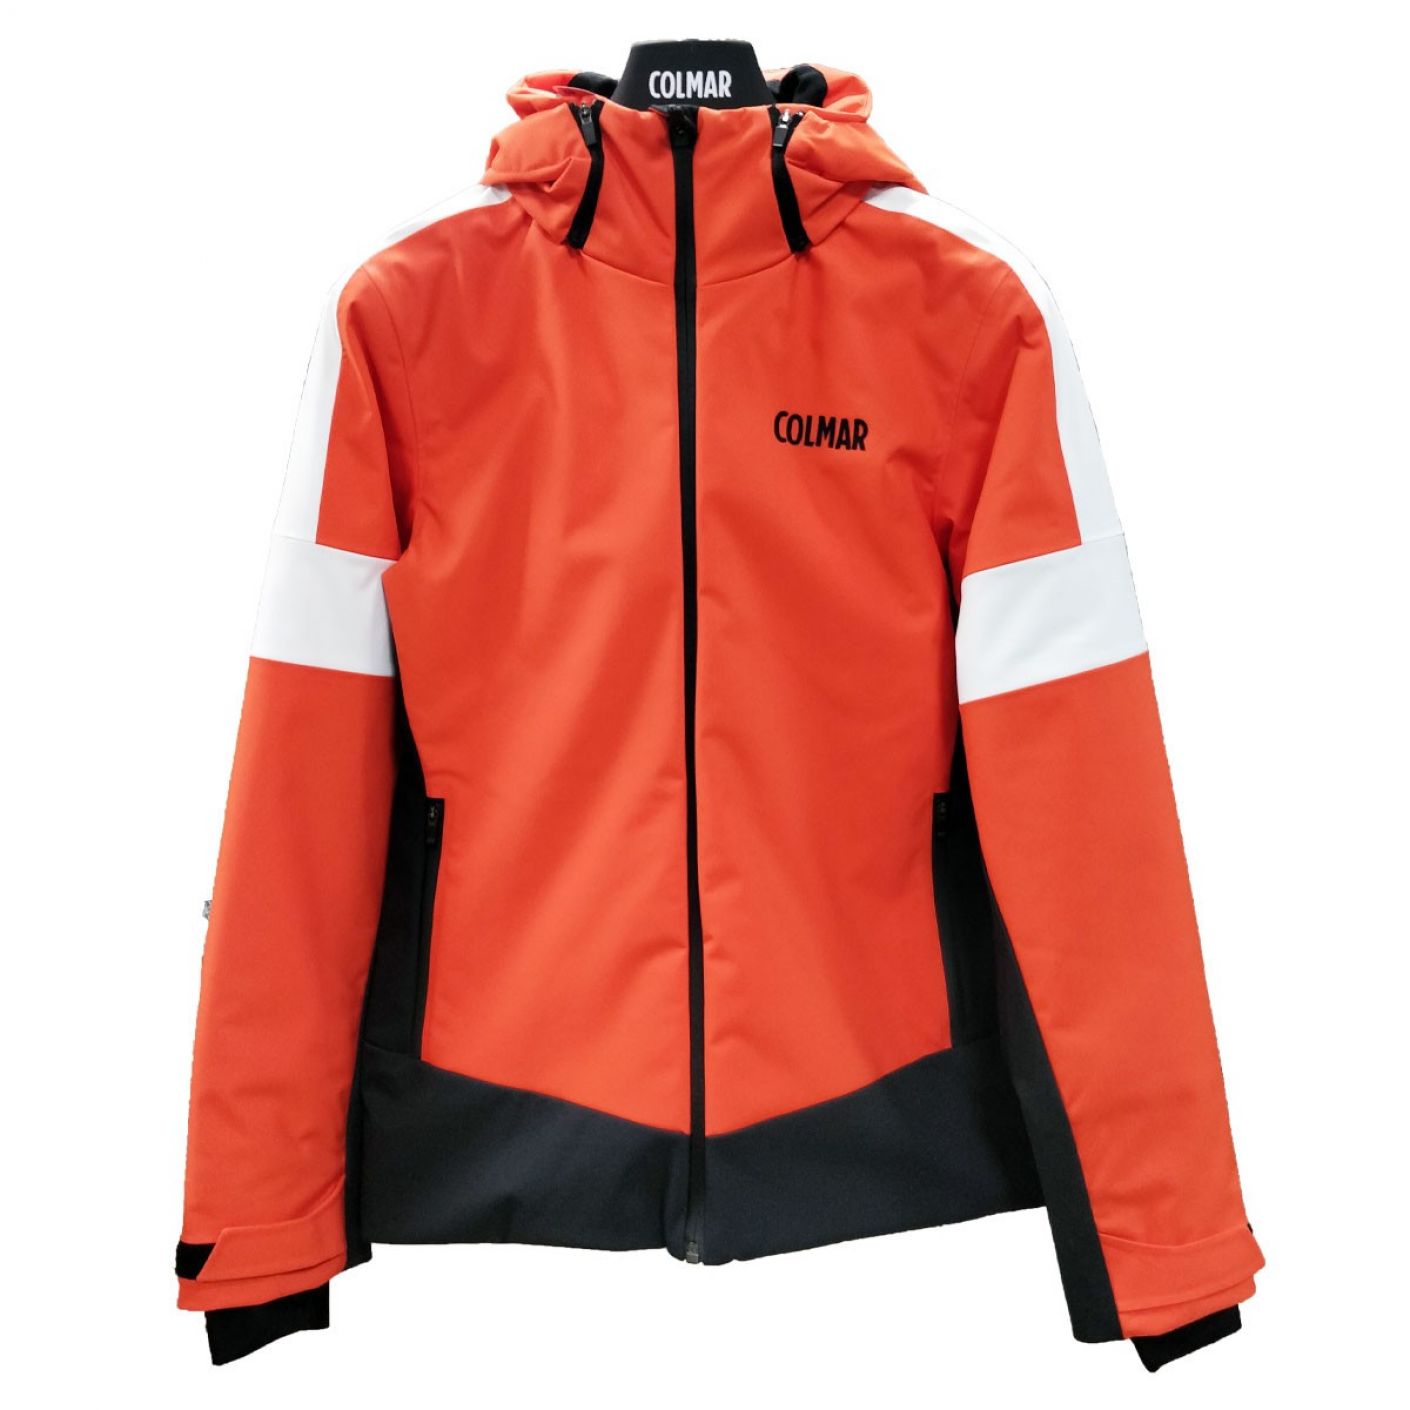 Colmar Iceland Women's Orange Ski Jacket